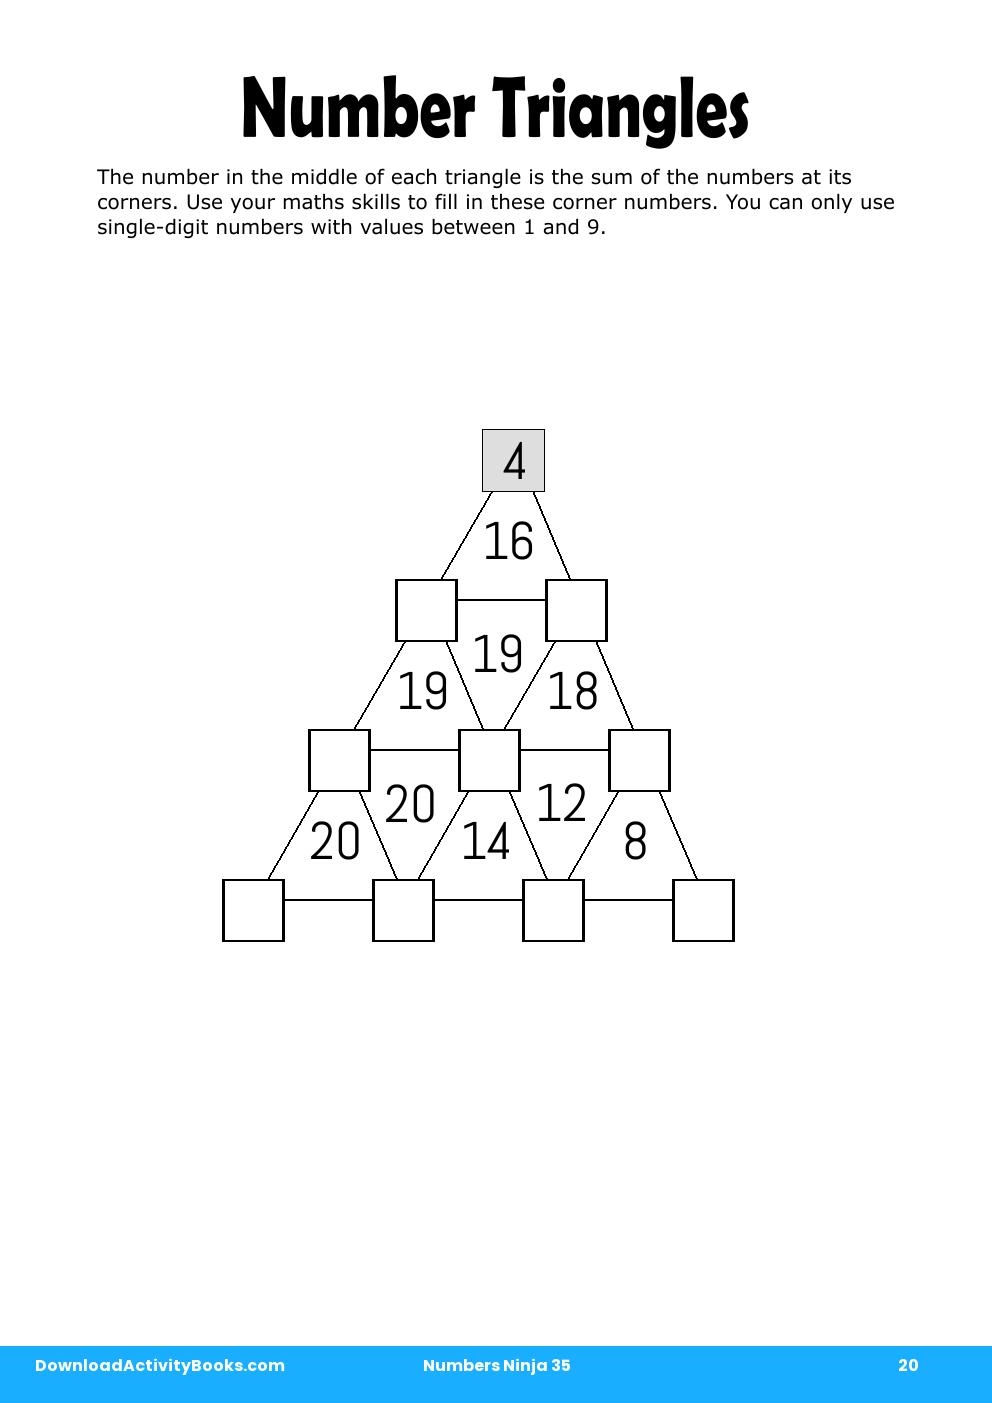 Number Triangles in Numbers Ninja 35